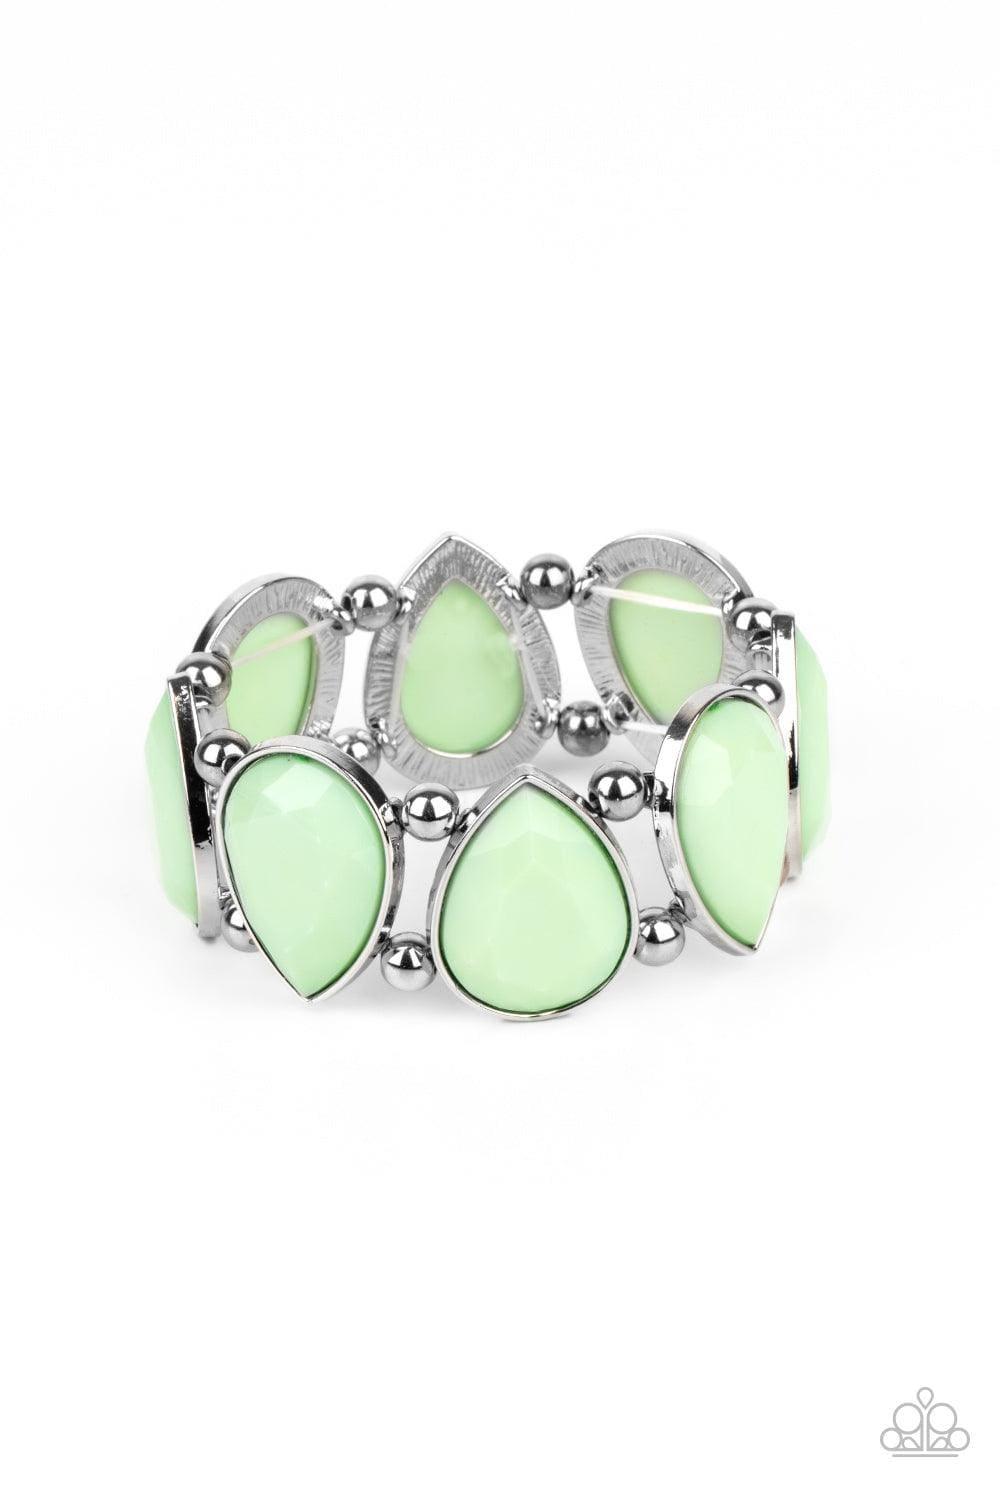 Paparazzi Accessories - Flamboyant Tease - Green Bracelet - Bling by JessieK